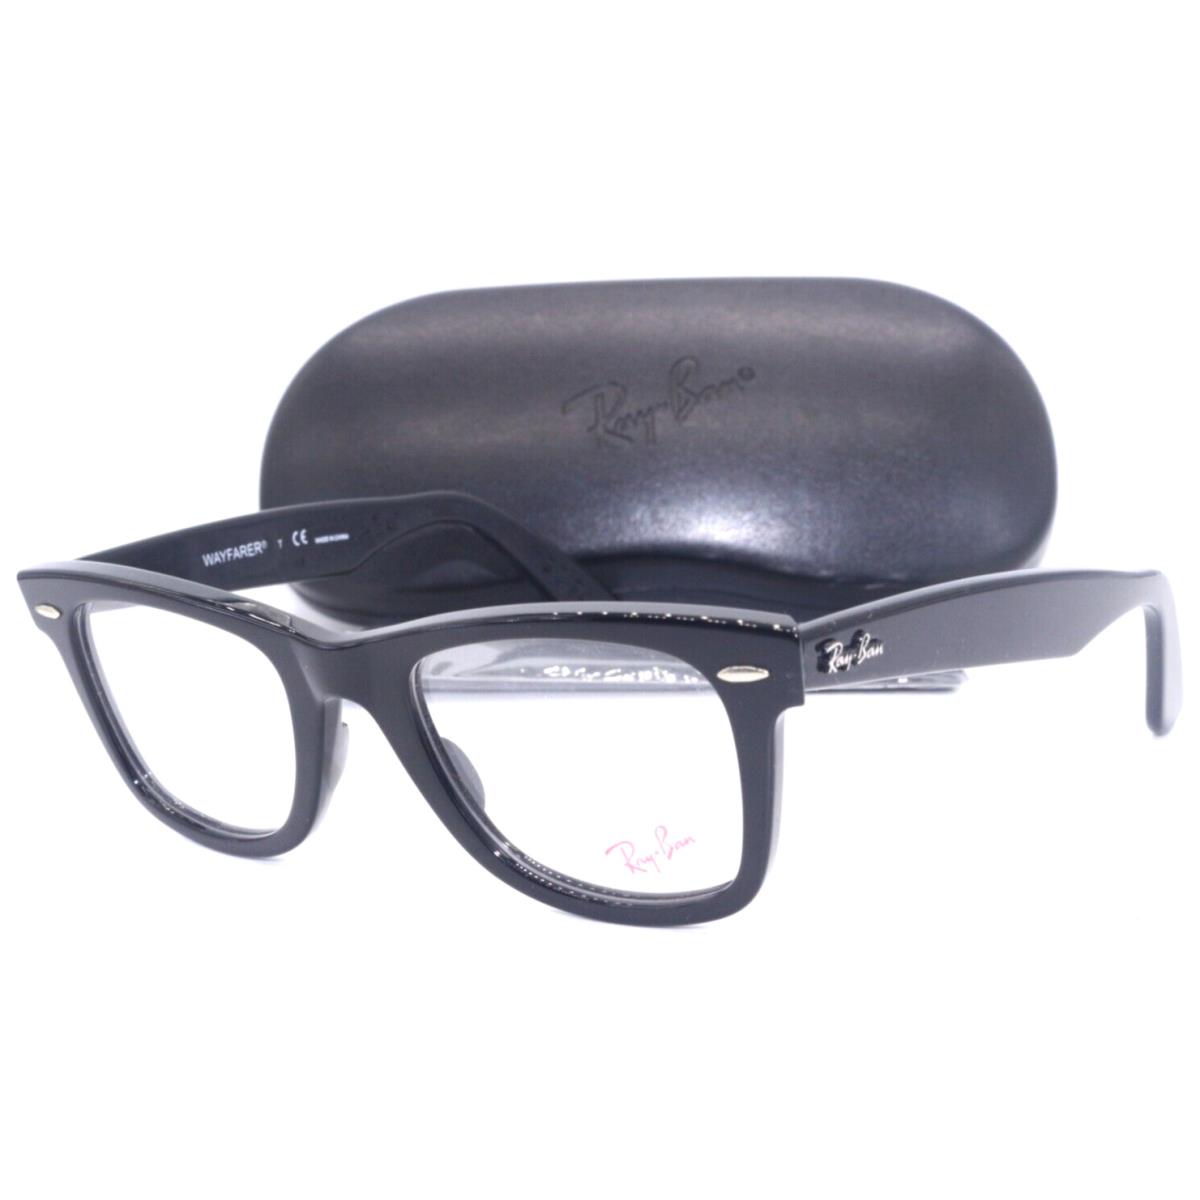 Ray-ban Mayfarer RB5121 2000 Polished Black Frame Eyeglasses 50-22